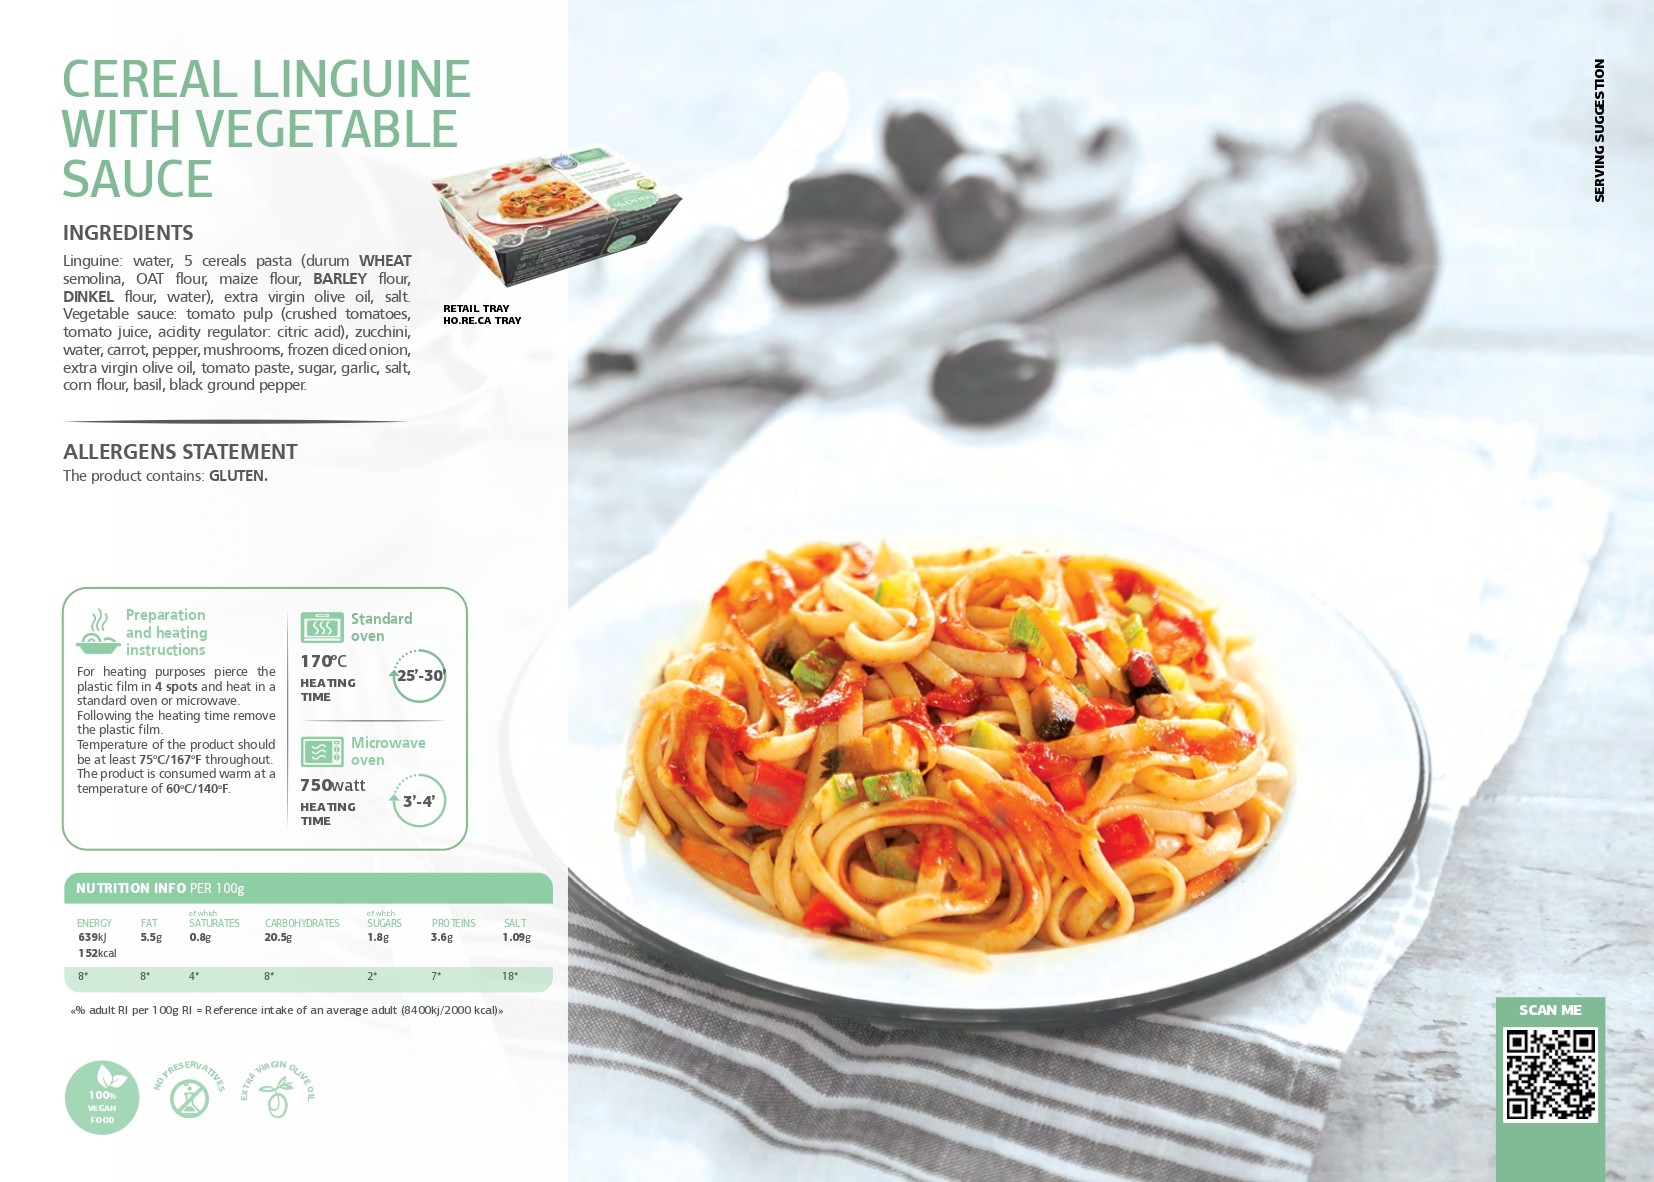 SK - Cereal linguine with vegetable sauce pdf image